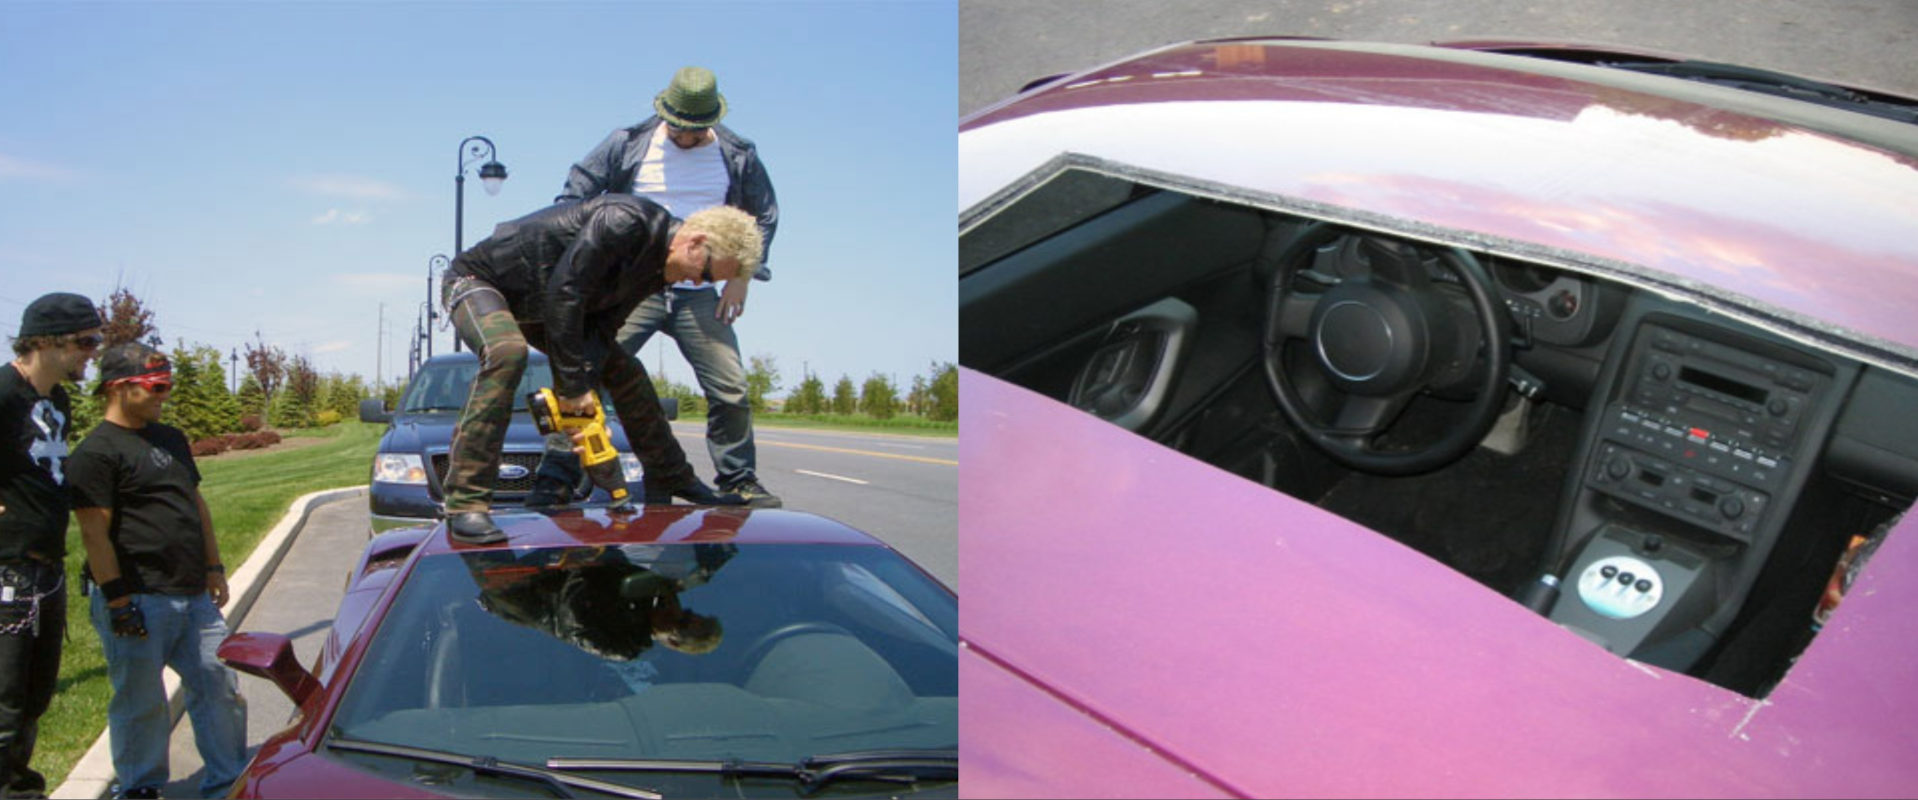 Bam Margera and his Lamborghini Gallardo convertible with Billy Idol